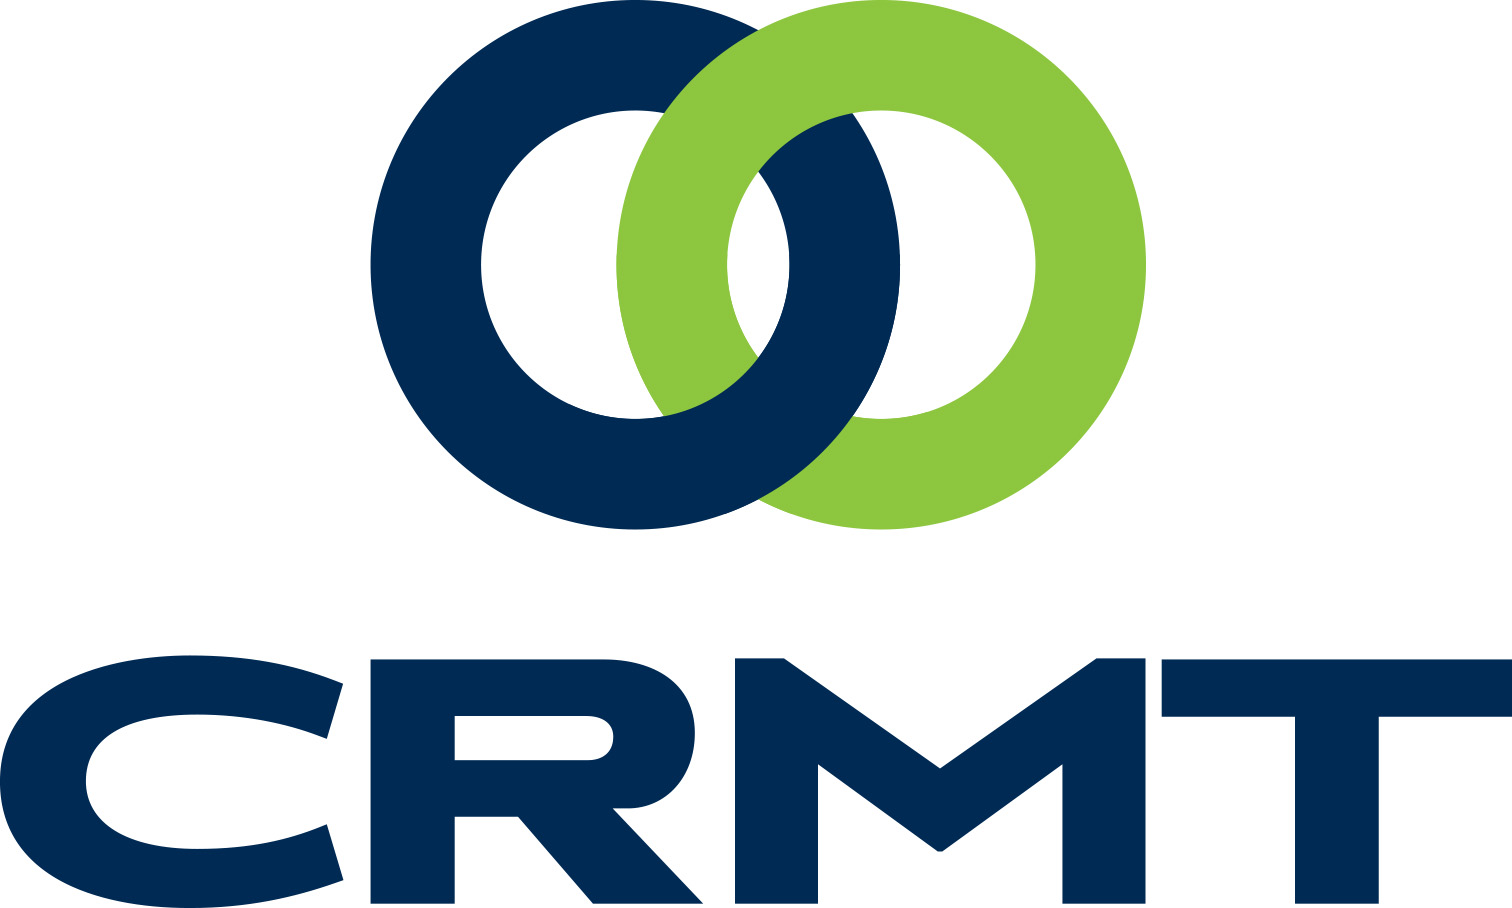 CRMT logo primarni color4